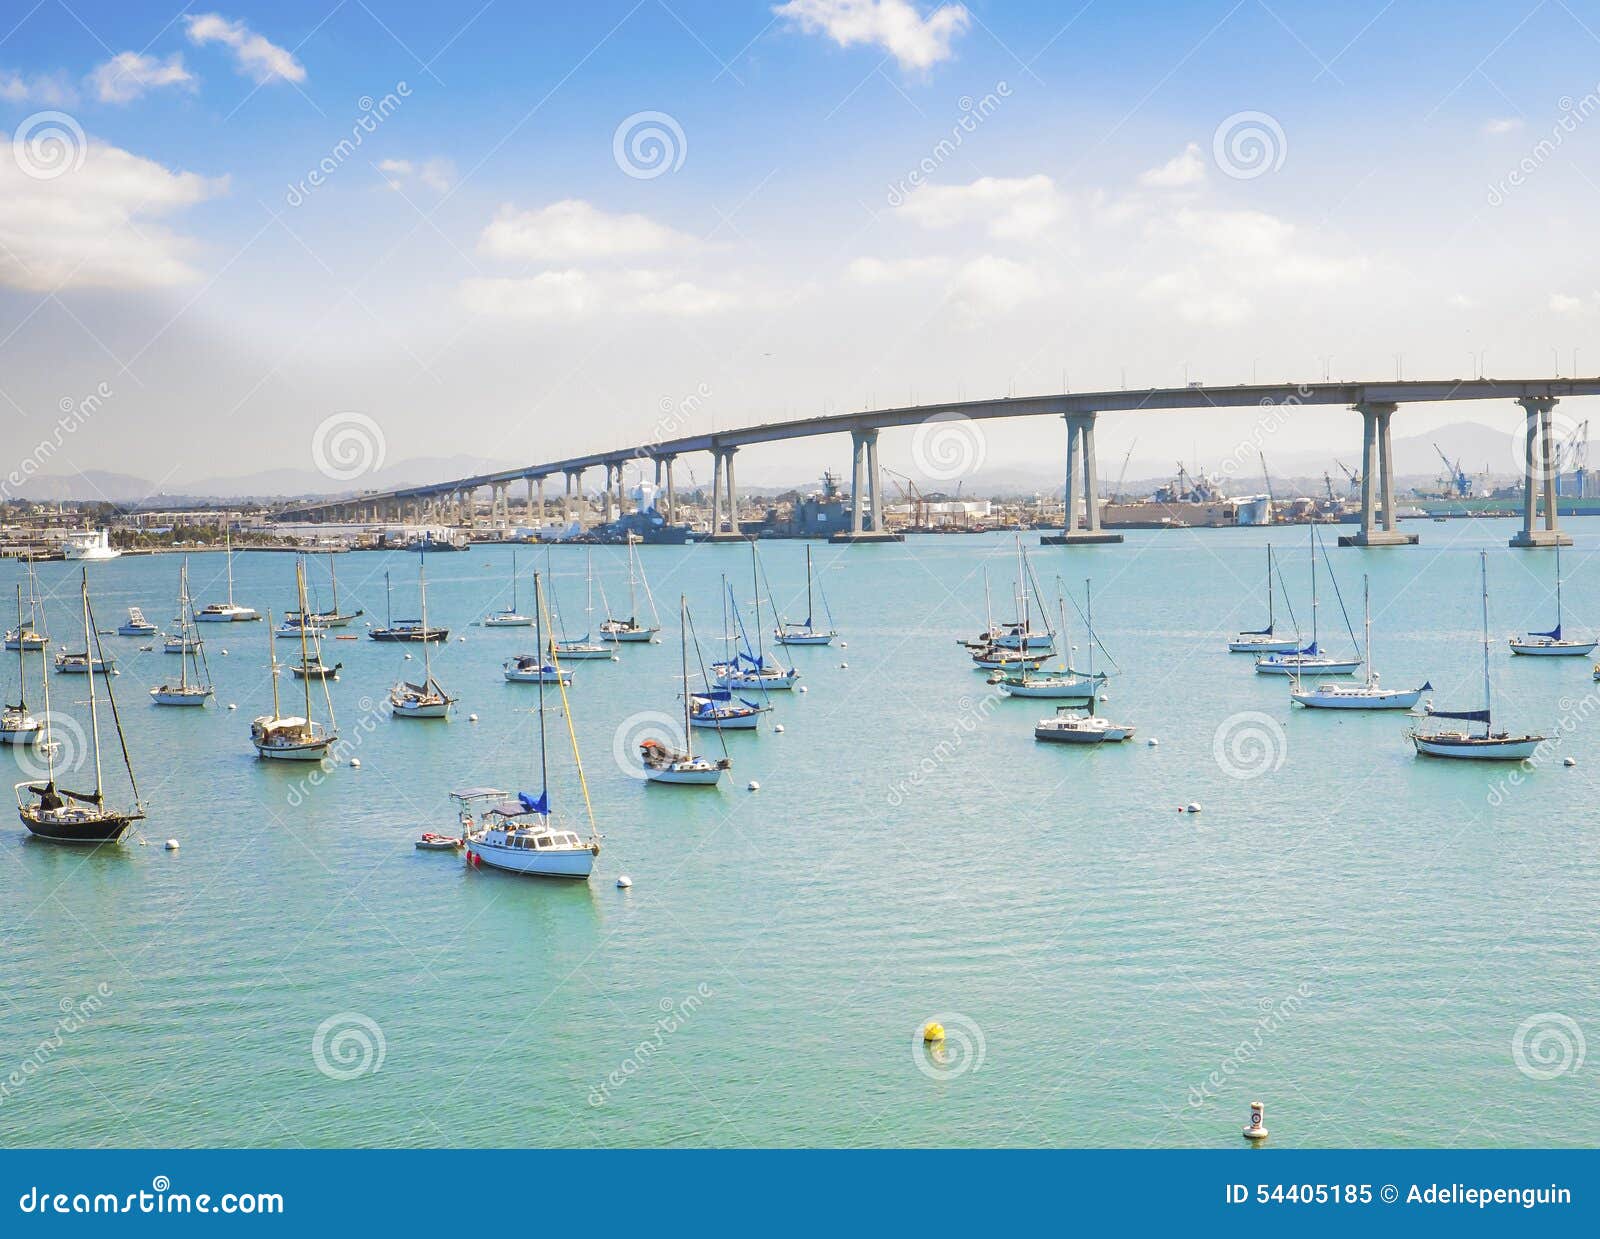 marina and coronado bridge, san diego